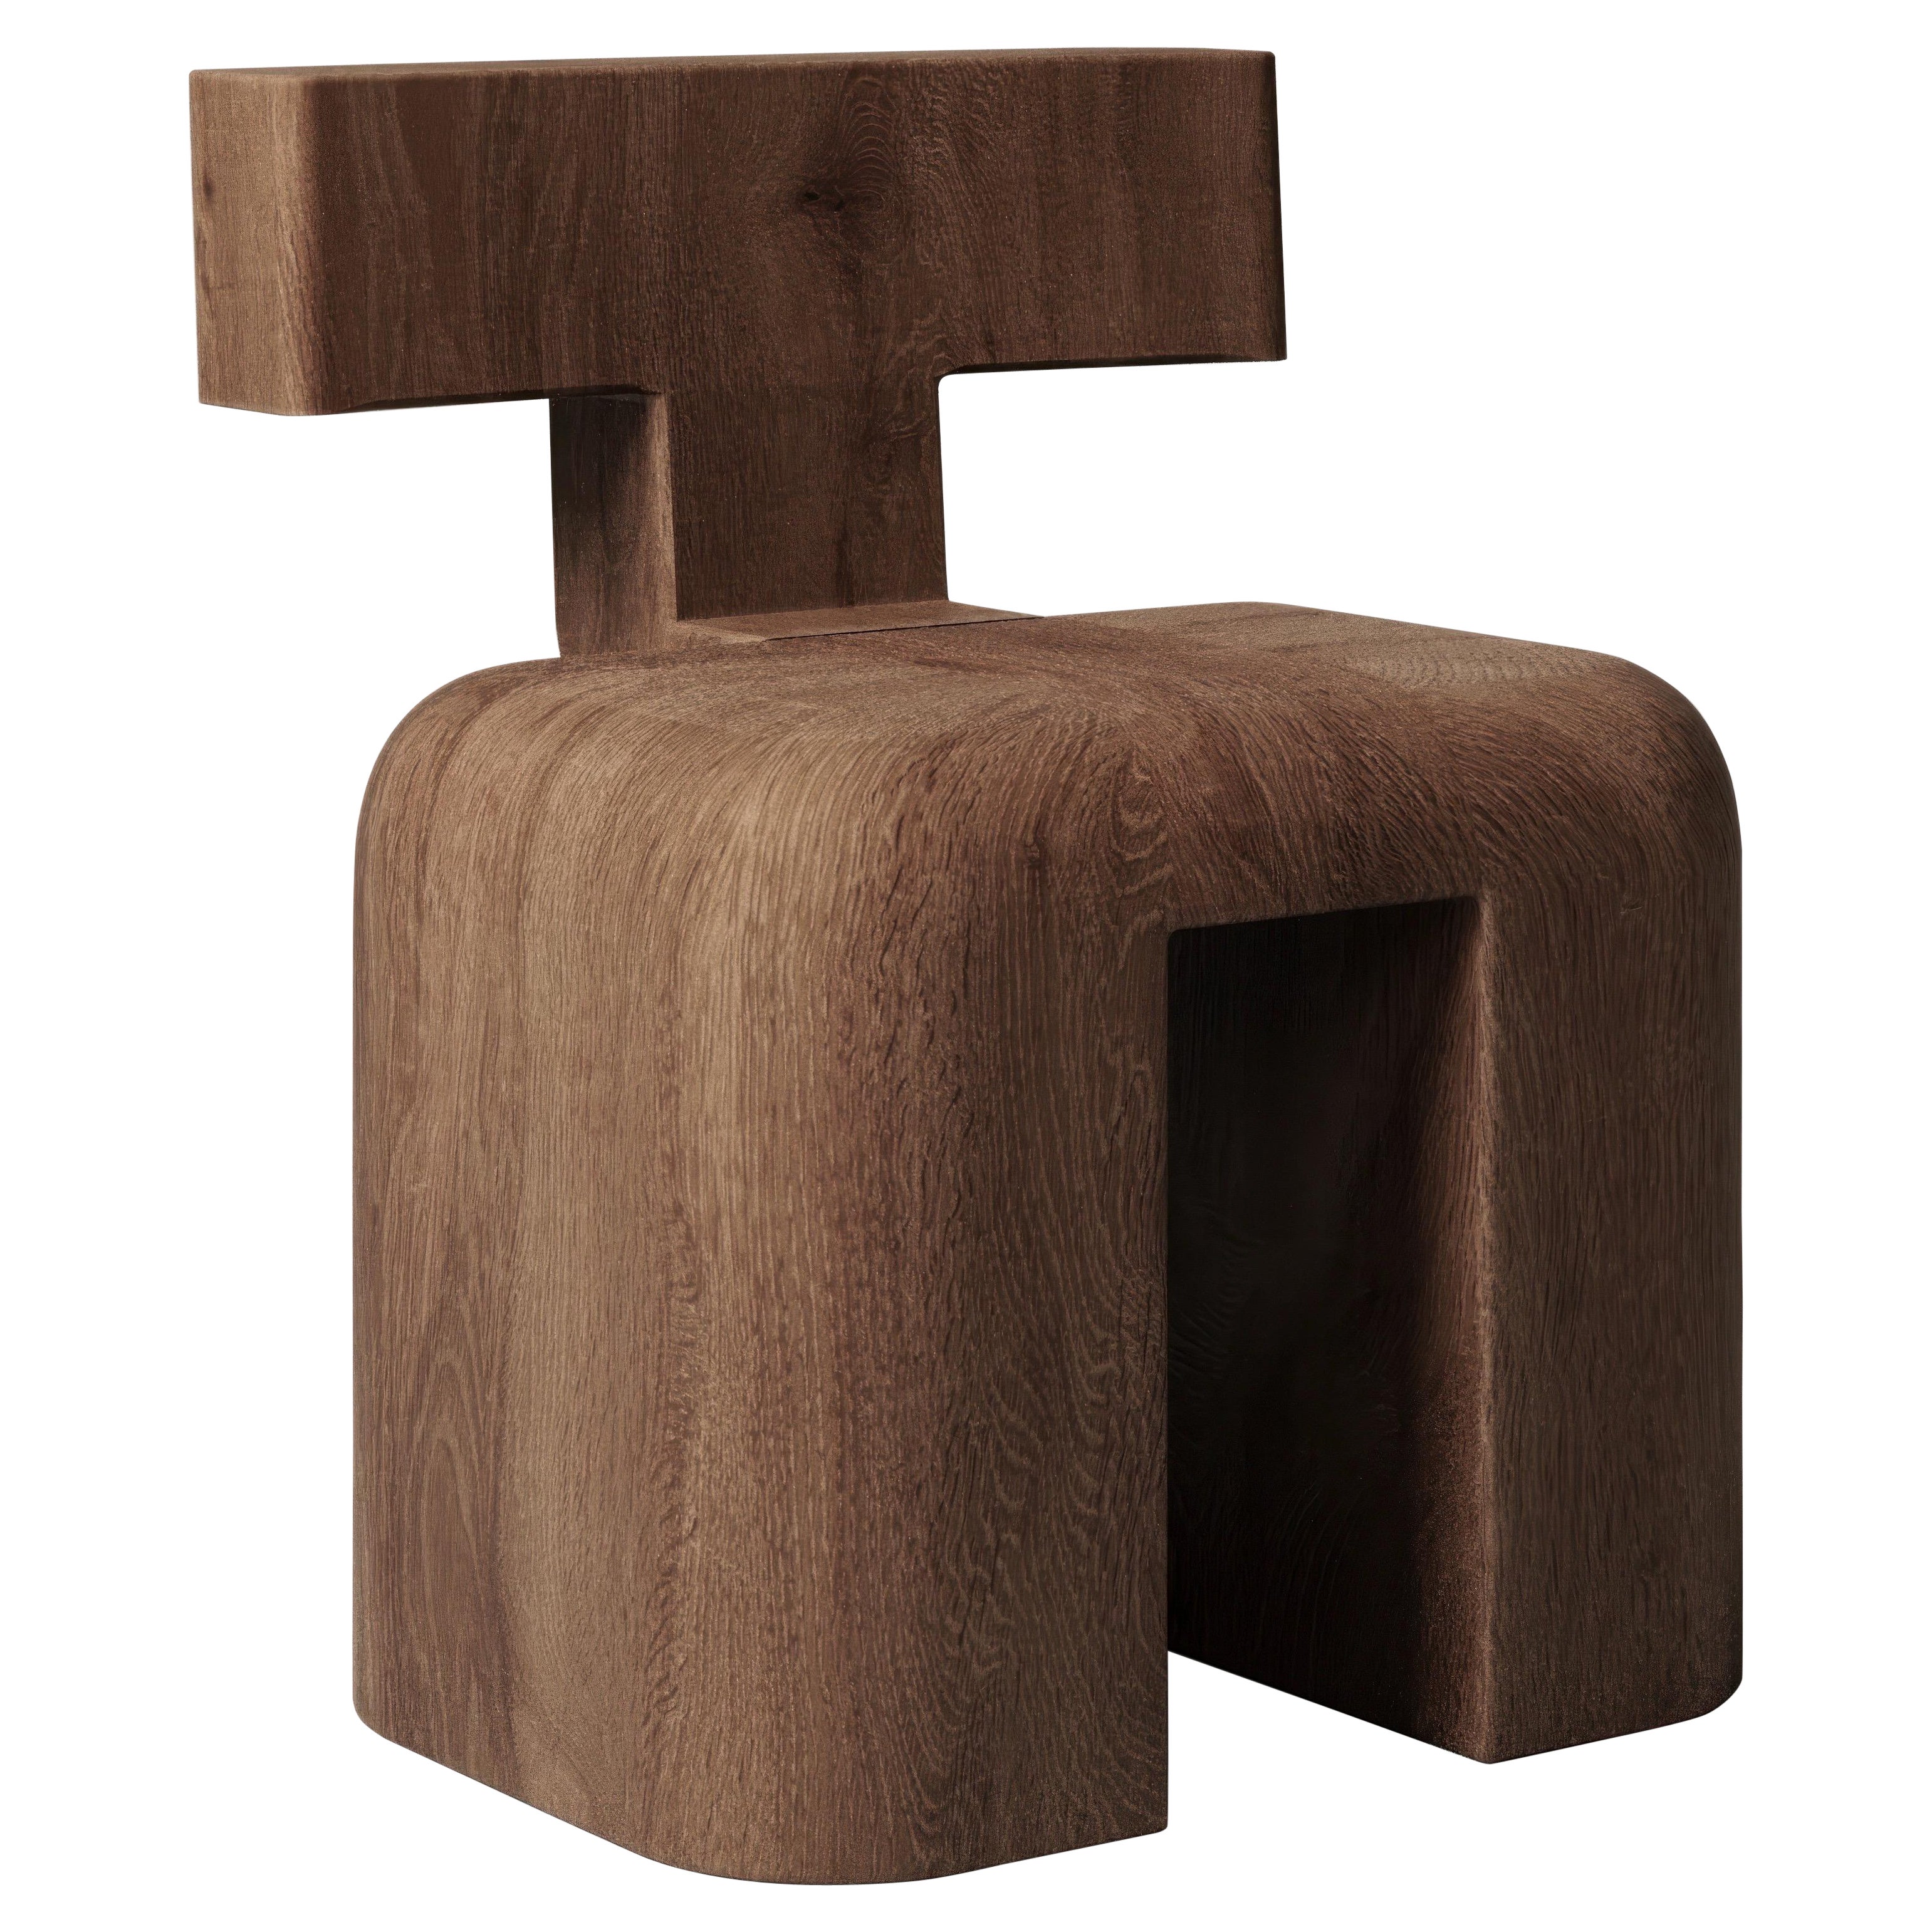 M_013 Chair / Oak by Monolith Studio For Sale